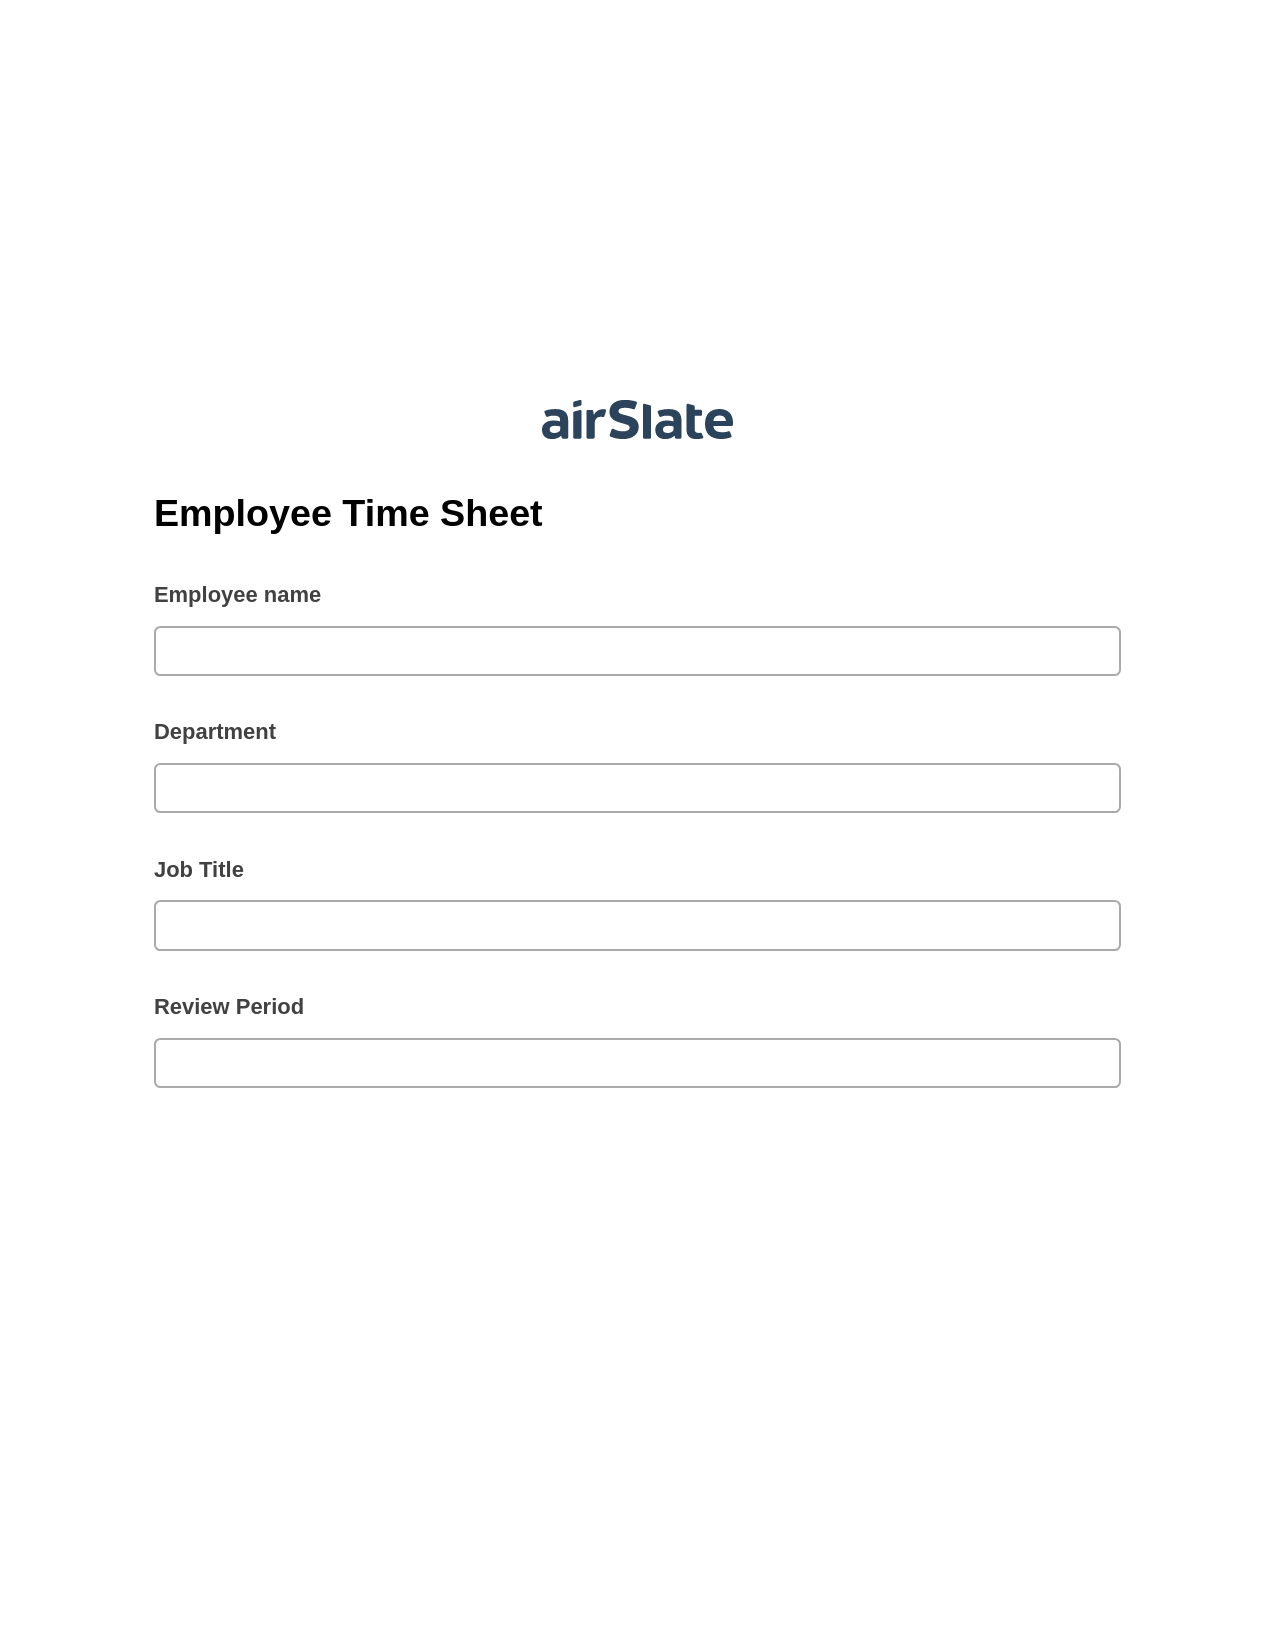 Multirole Employee Time Sheet Pre-fill Document Bot, Update Audit Trail Bot, Slack Notification Postfinish Bot